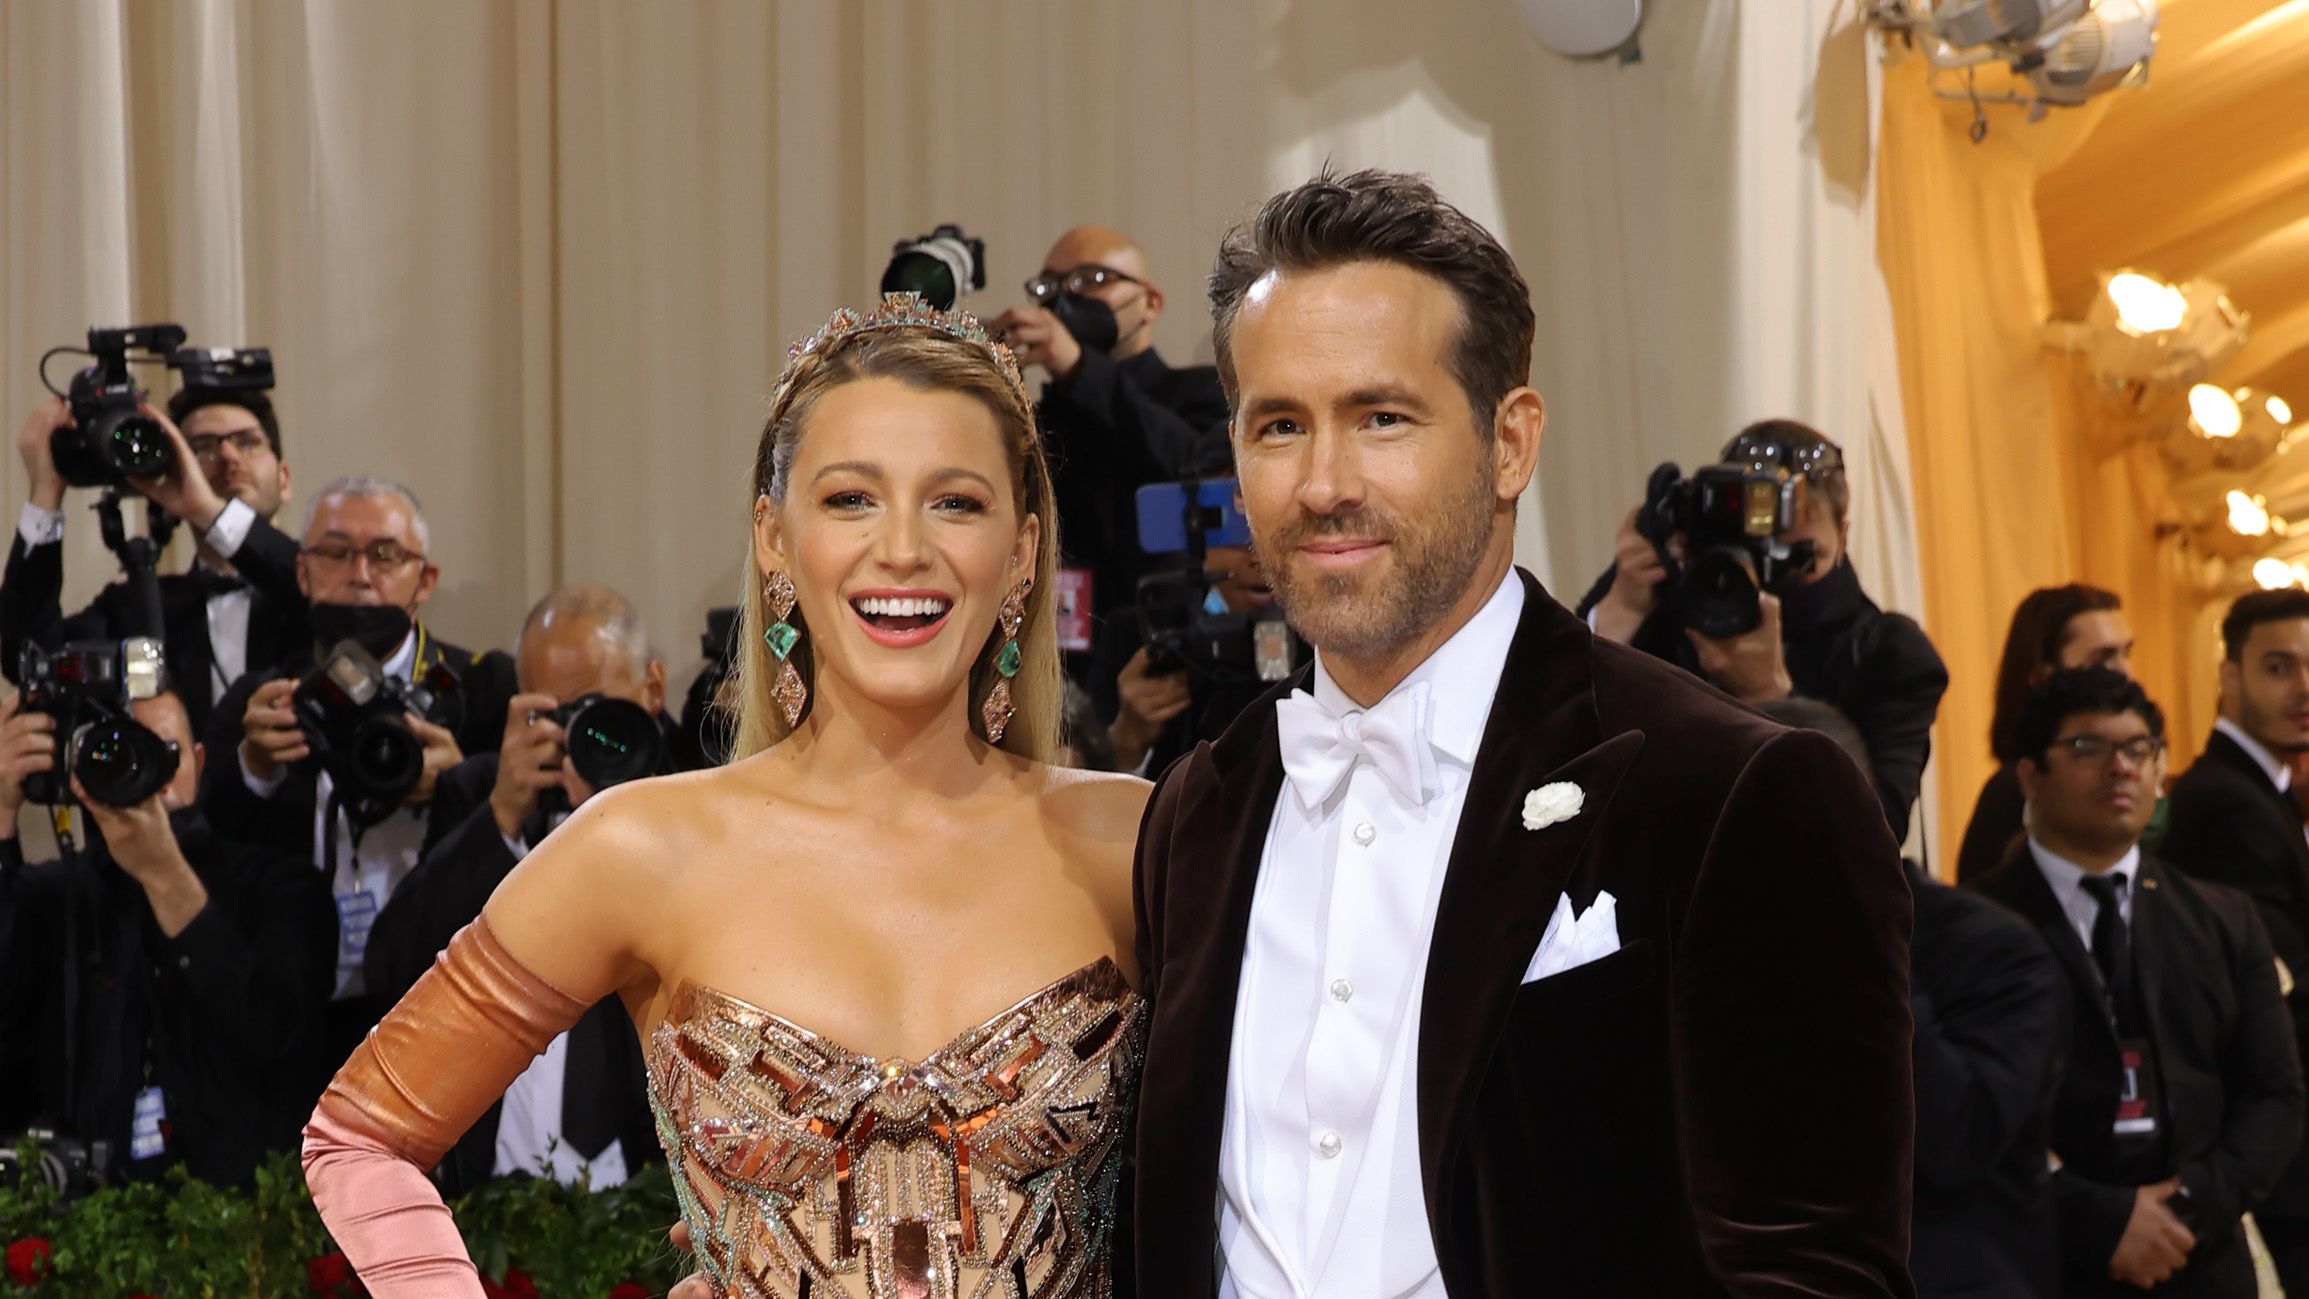 Met Gala 2022: Ryan Reynolds And Blake Lively Arrive